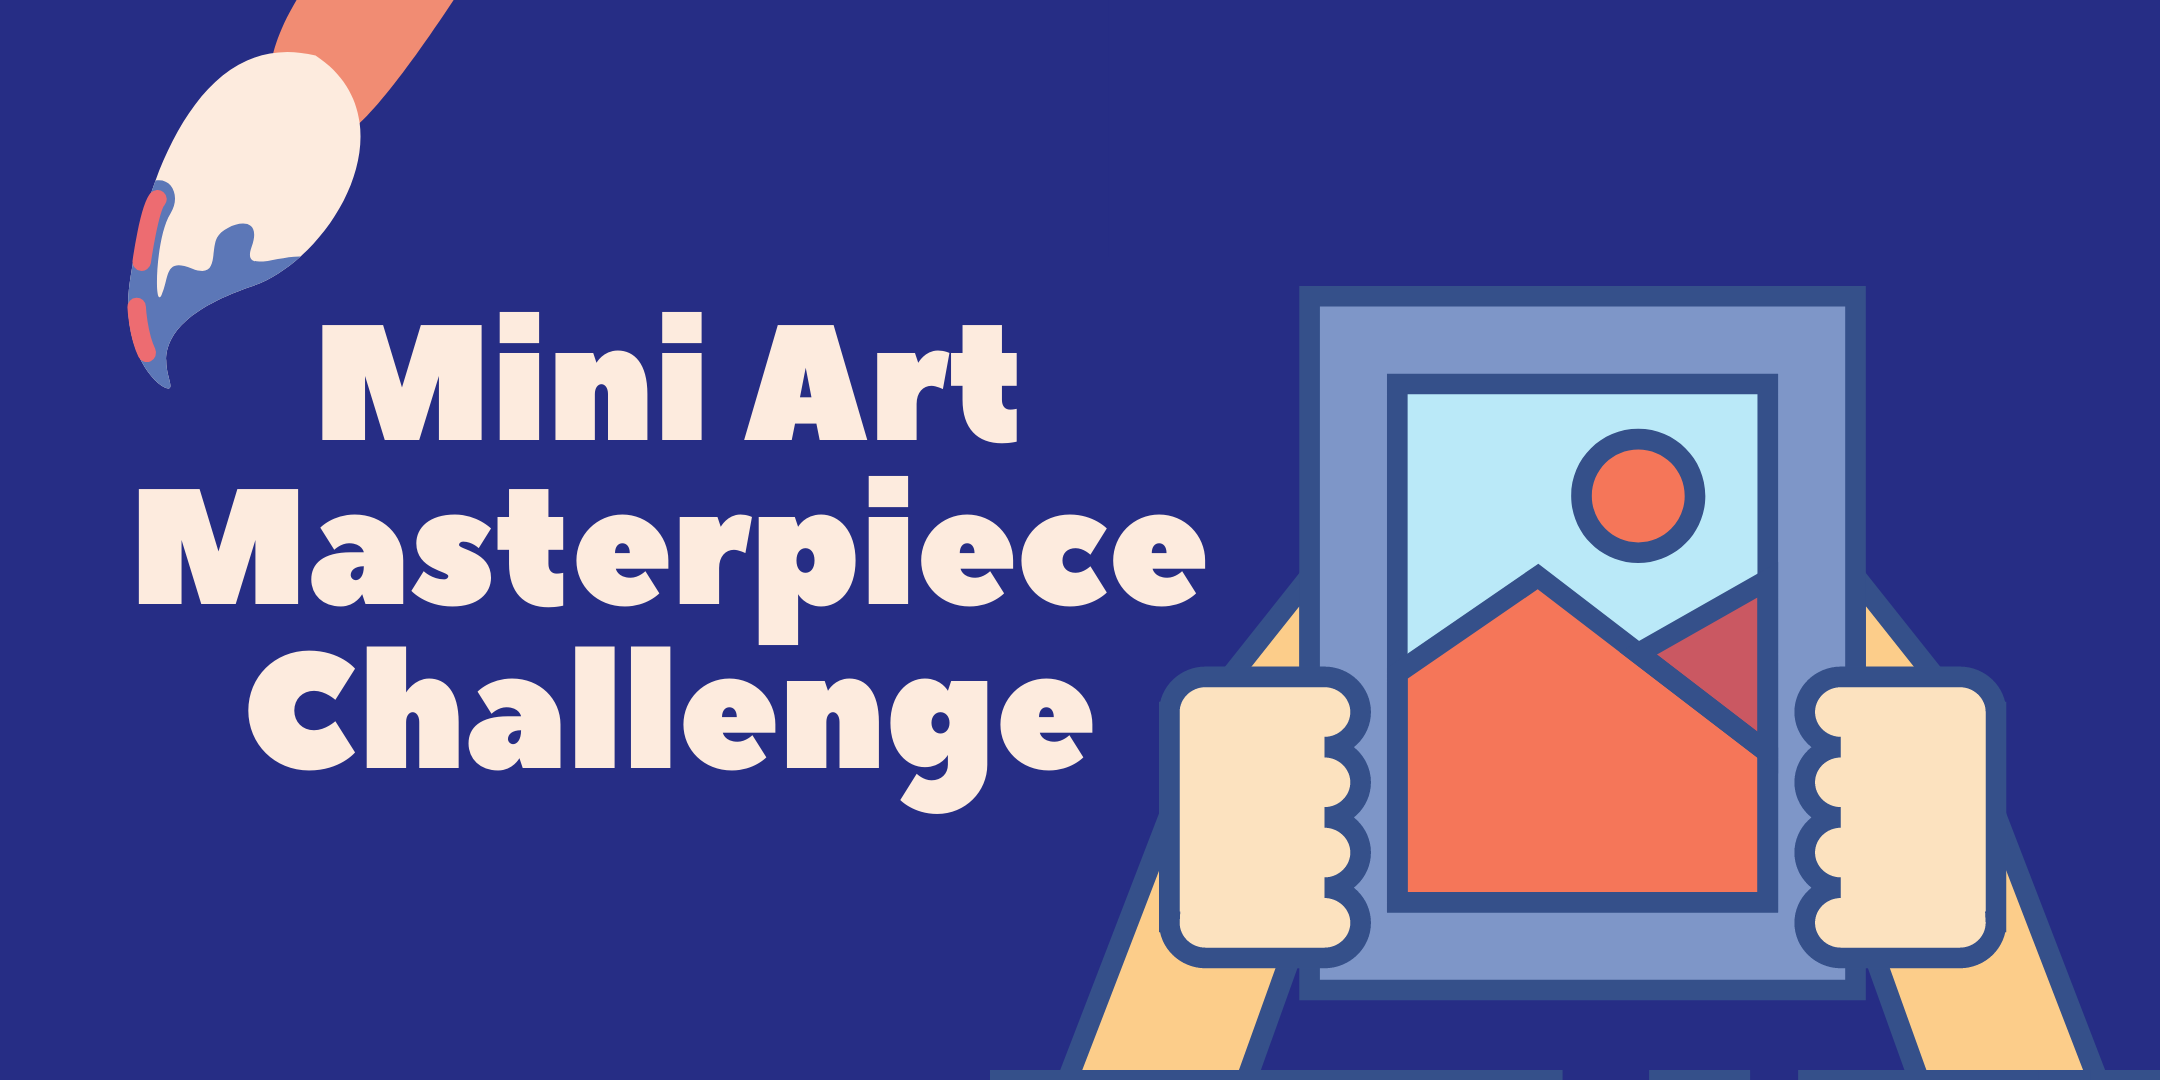 Mini Art Masterpiece Challenge image